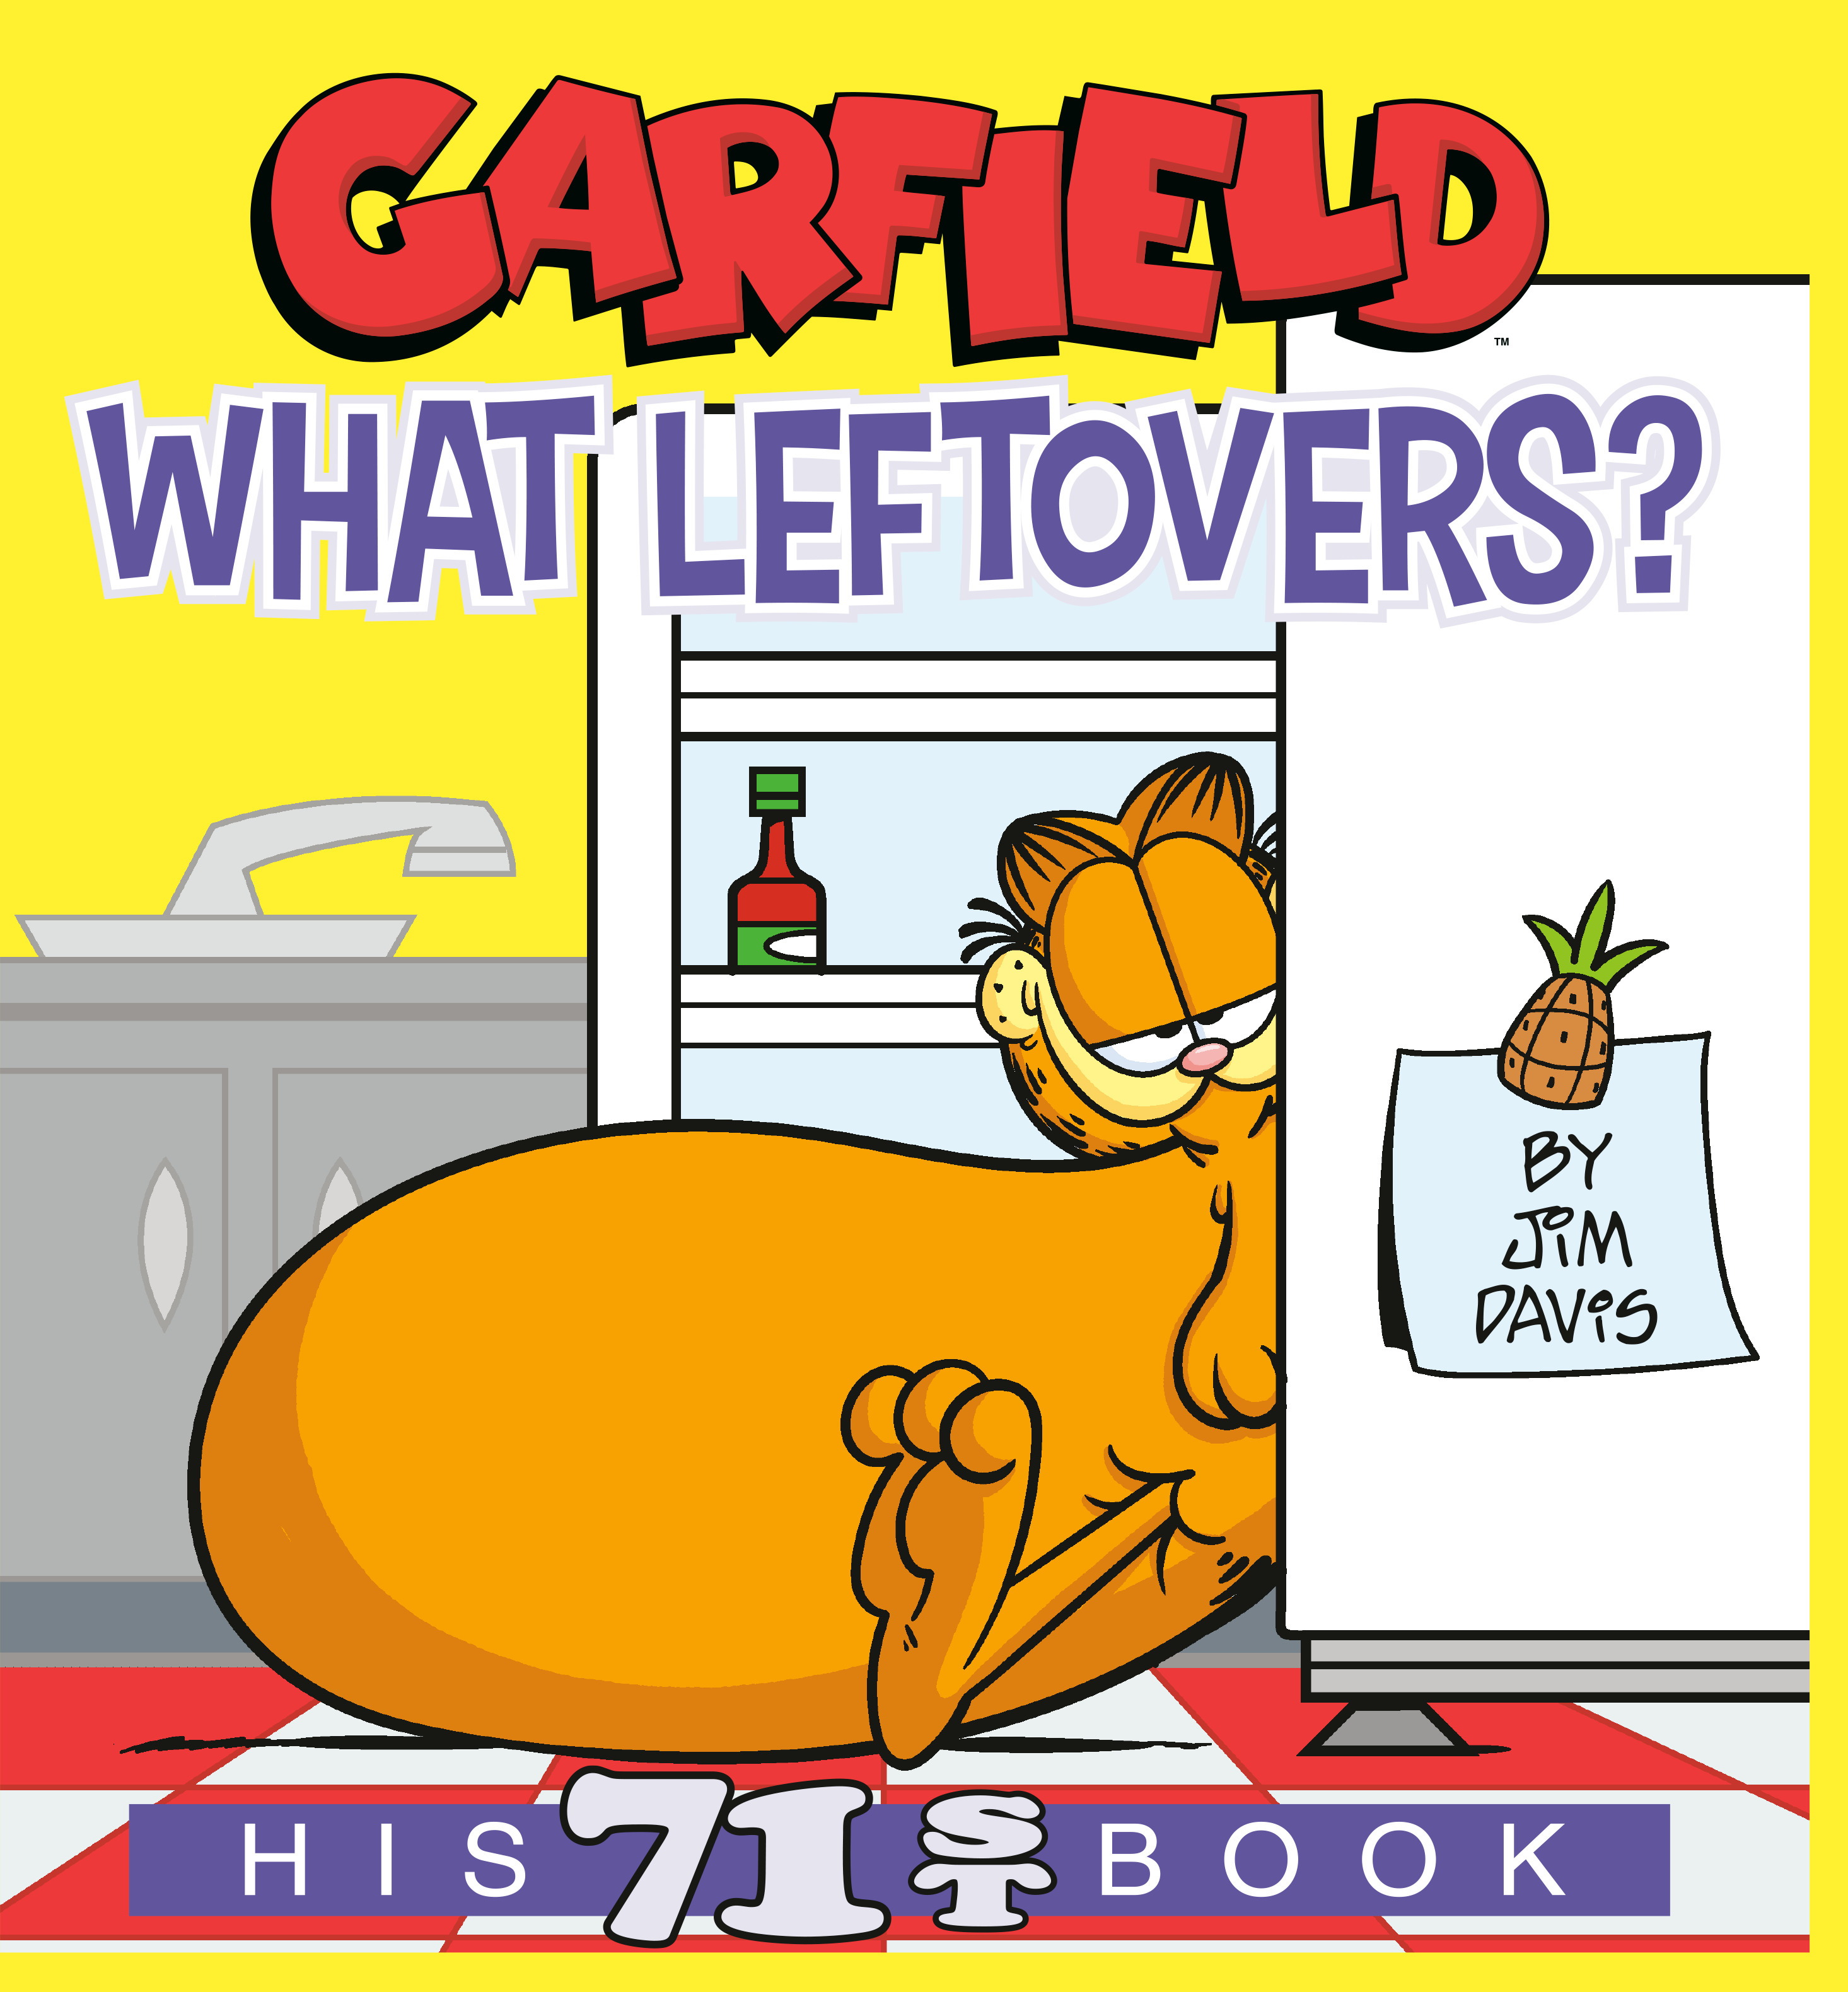 Garfield What Leftovers? : His 71st Book | Davis, Jim